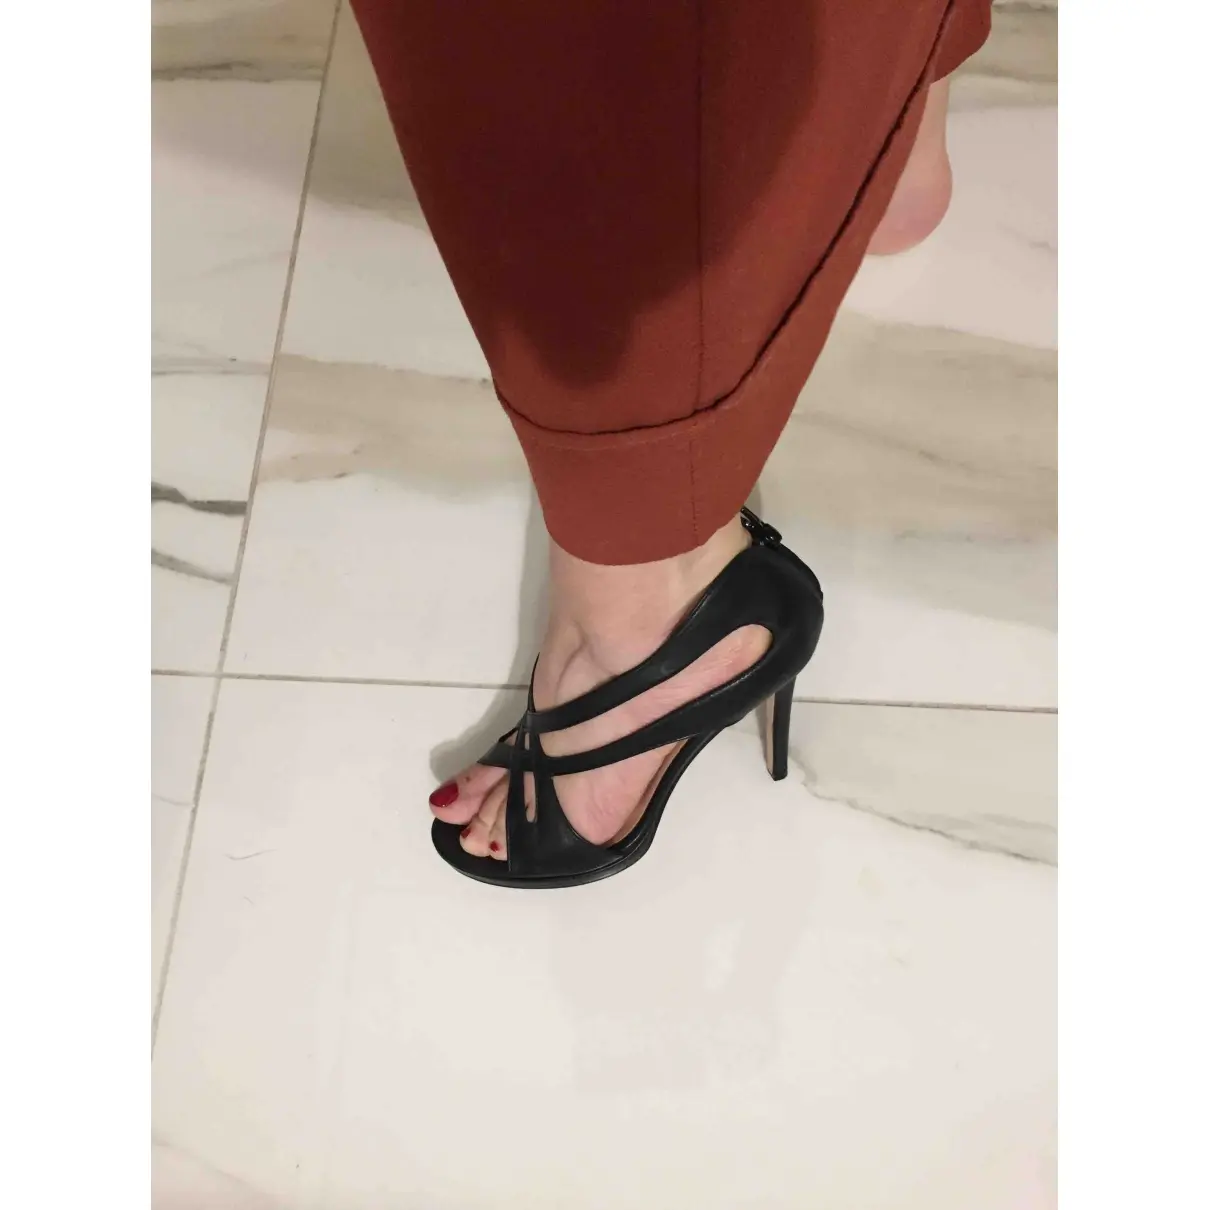 Buy Anna Leather heels online